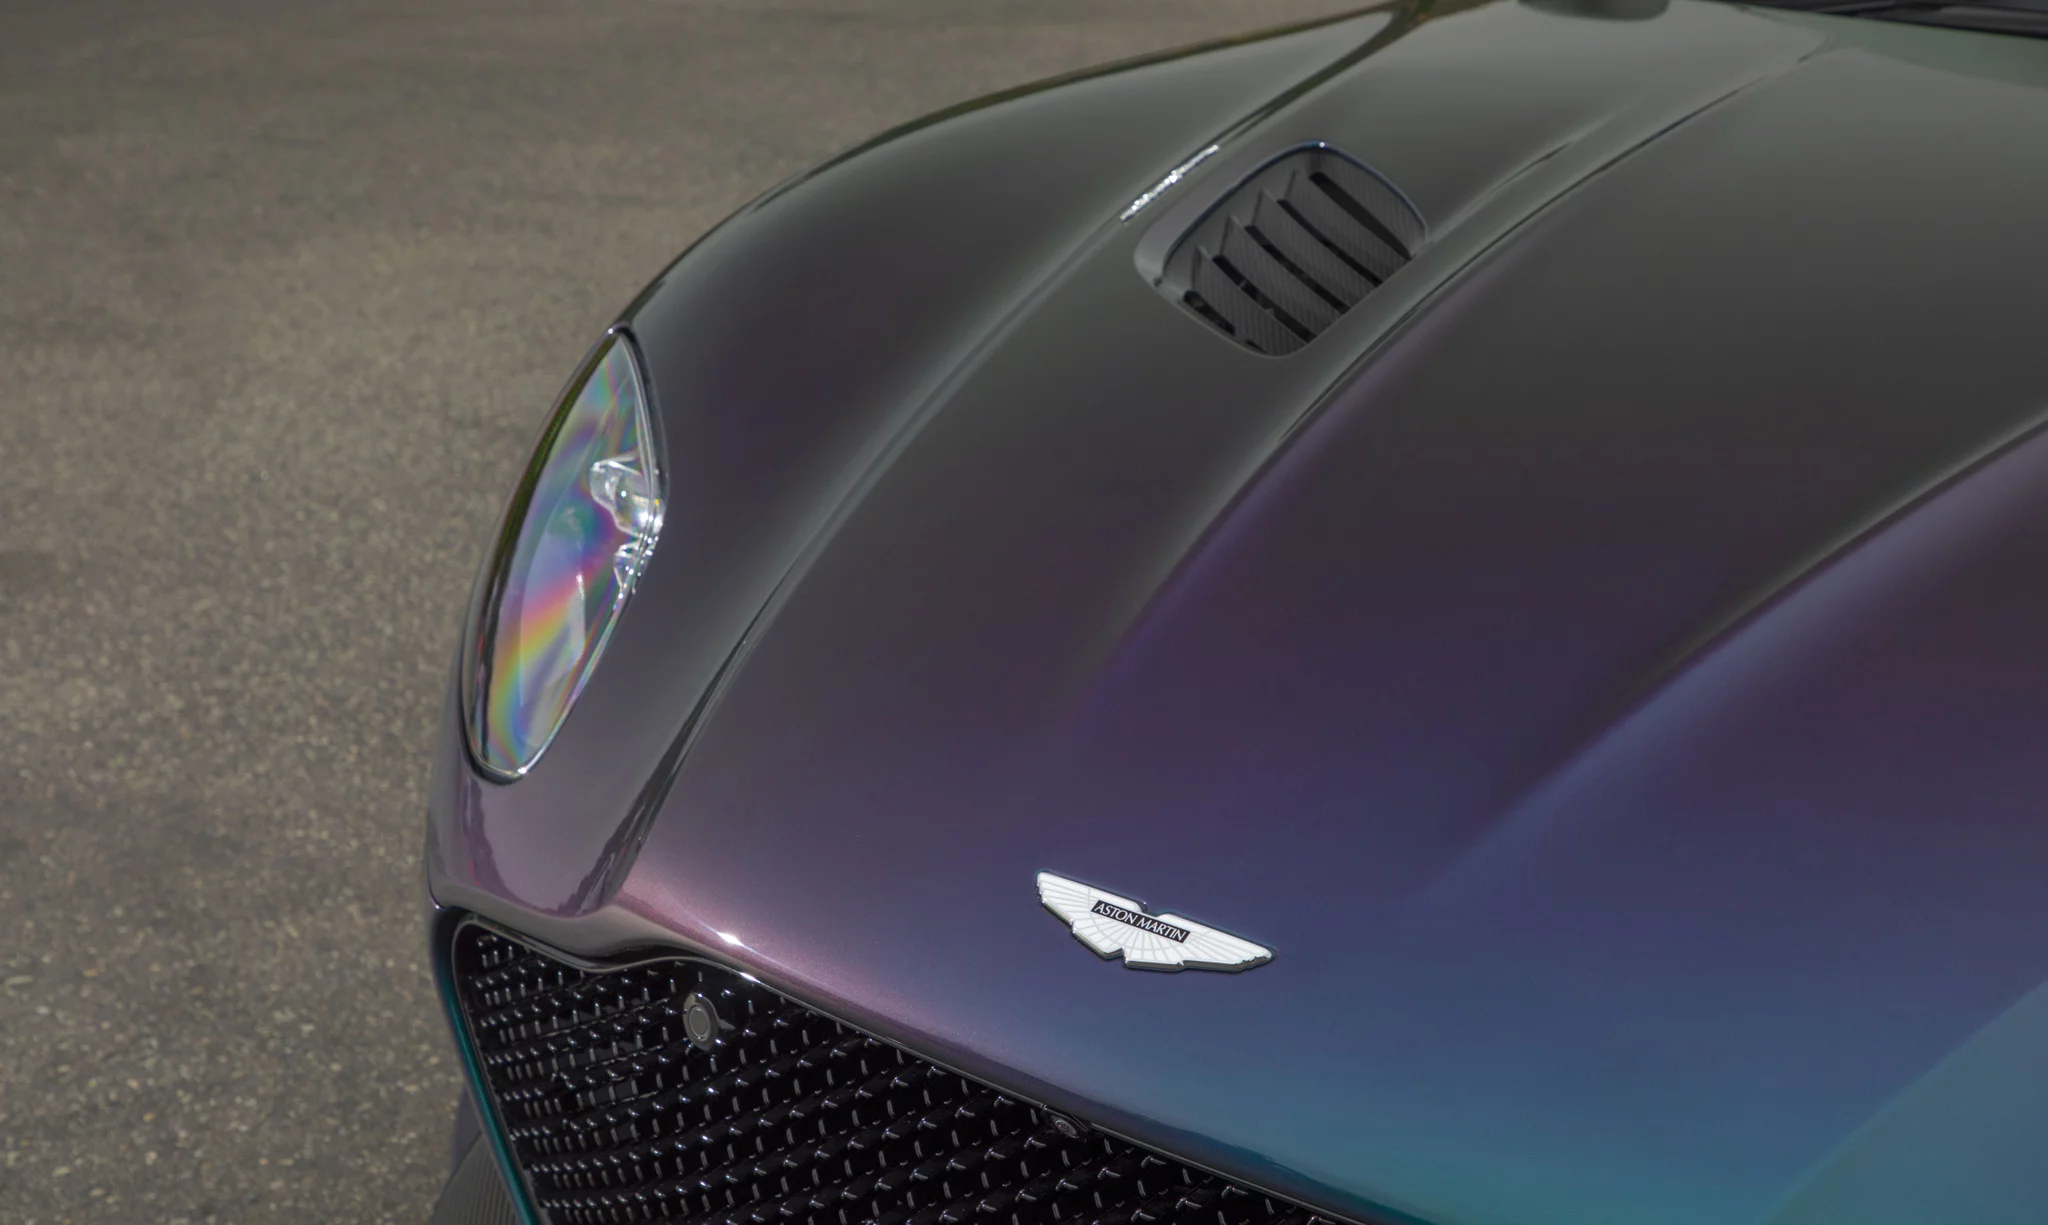 Spectral Blue Aston Martin DBS